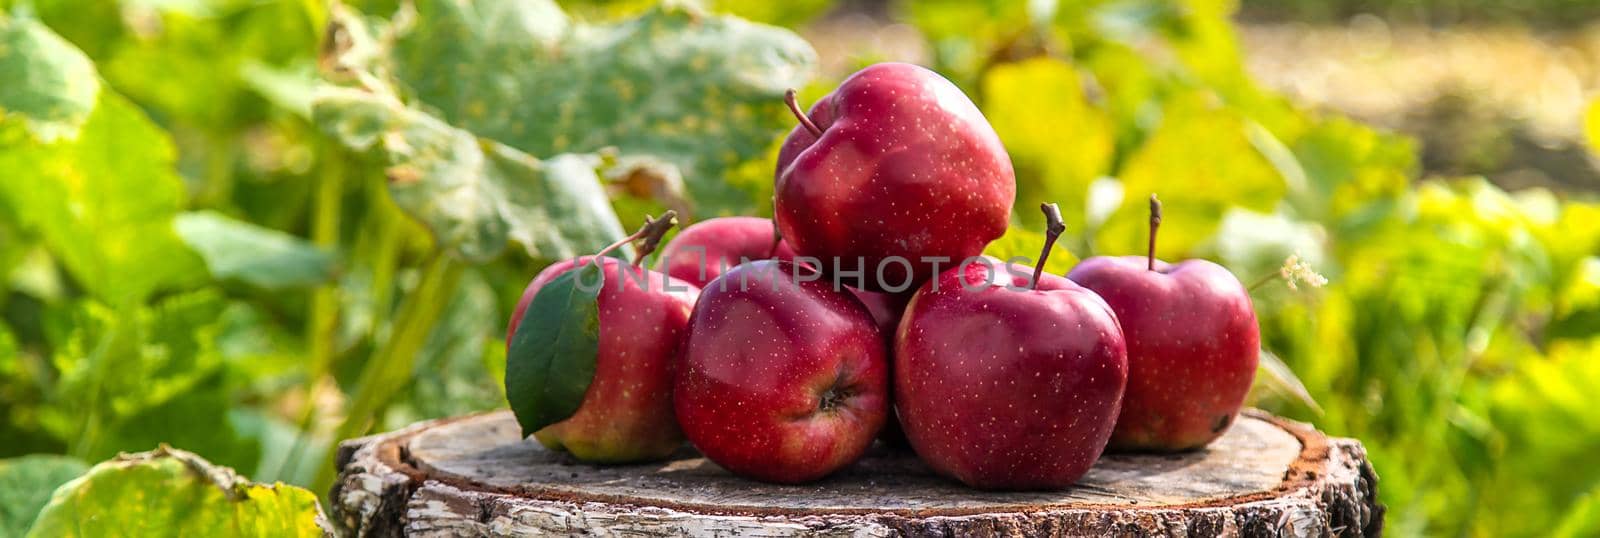 Apple harvest in the garden. Selective focus. by yanadjana